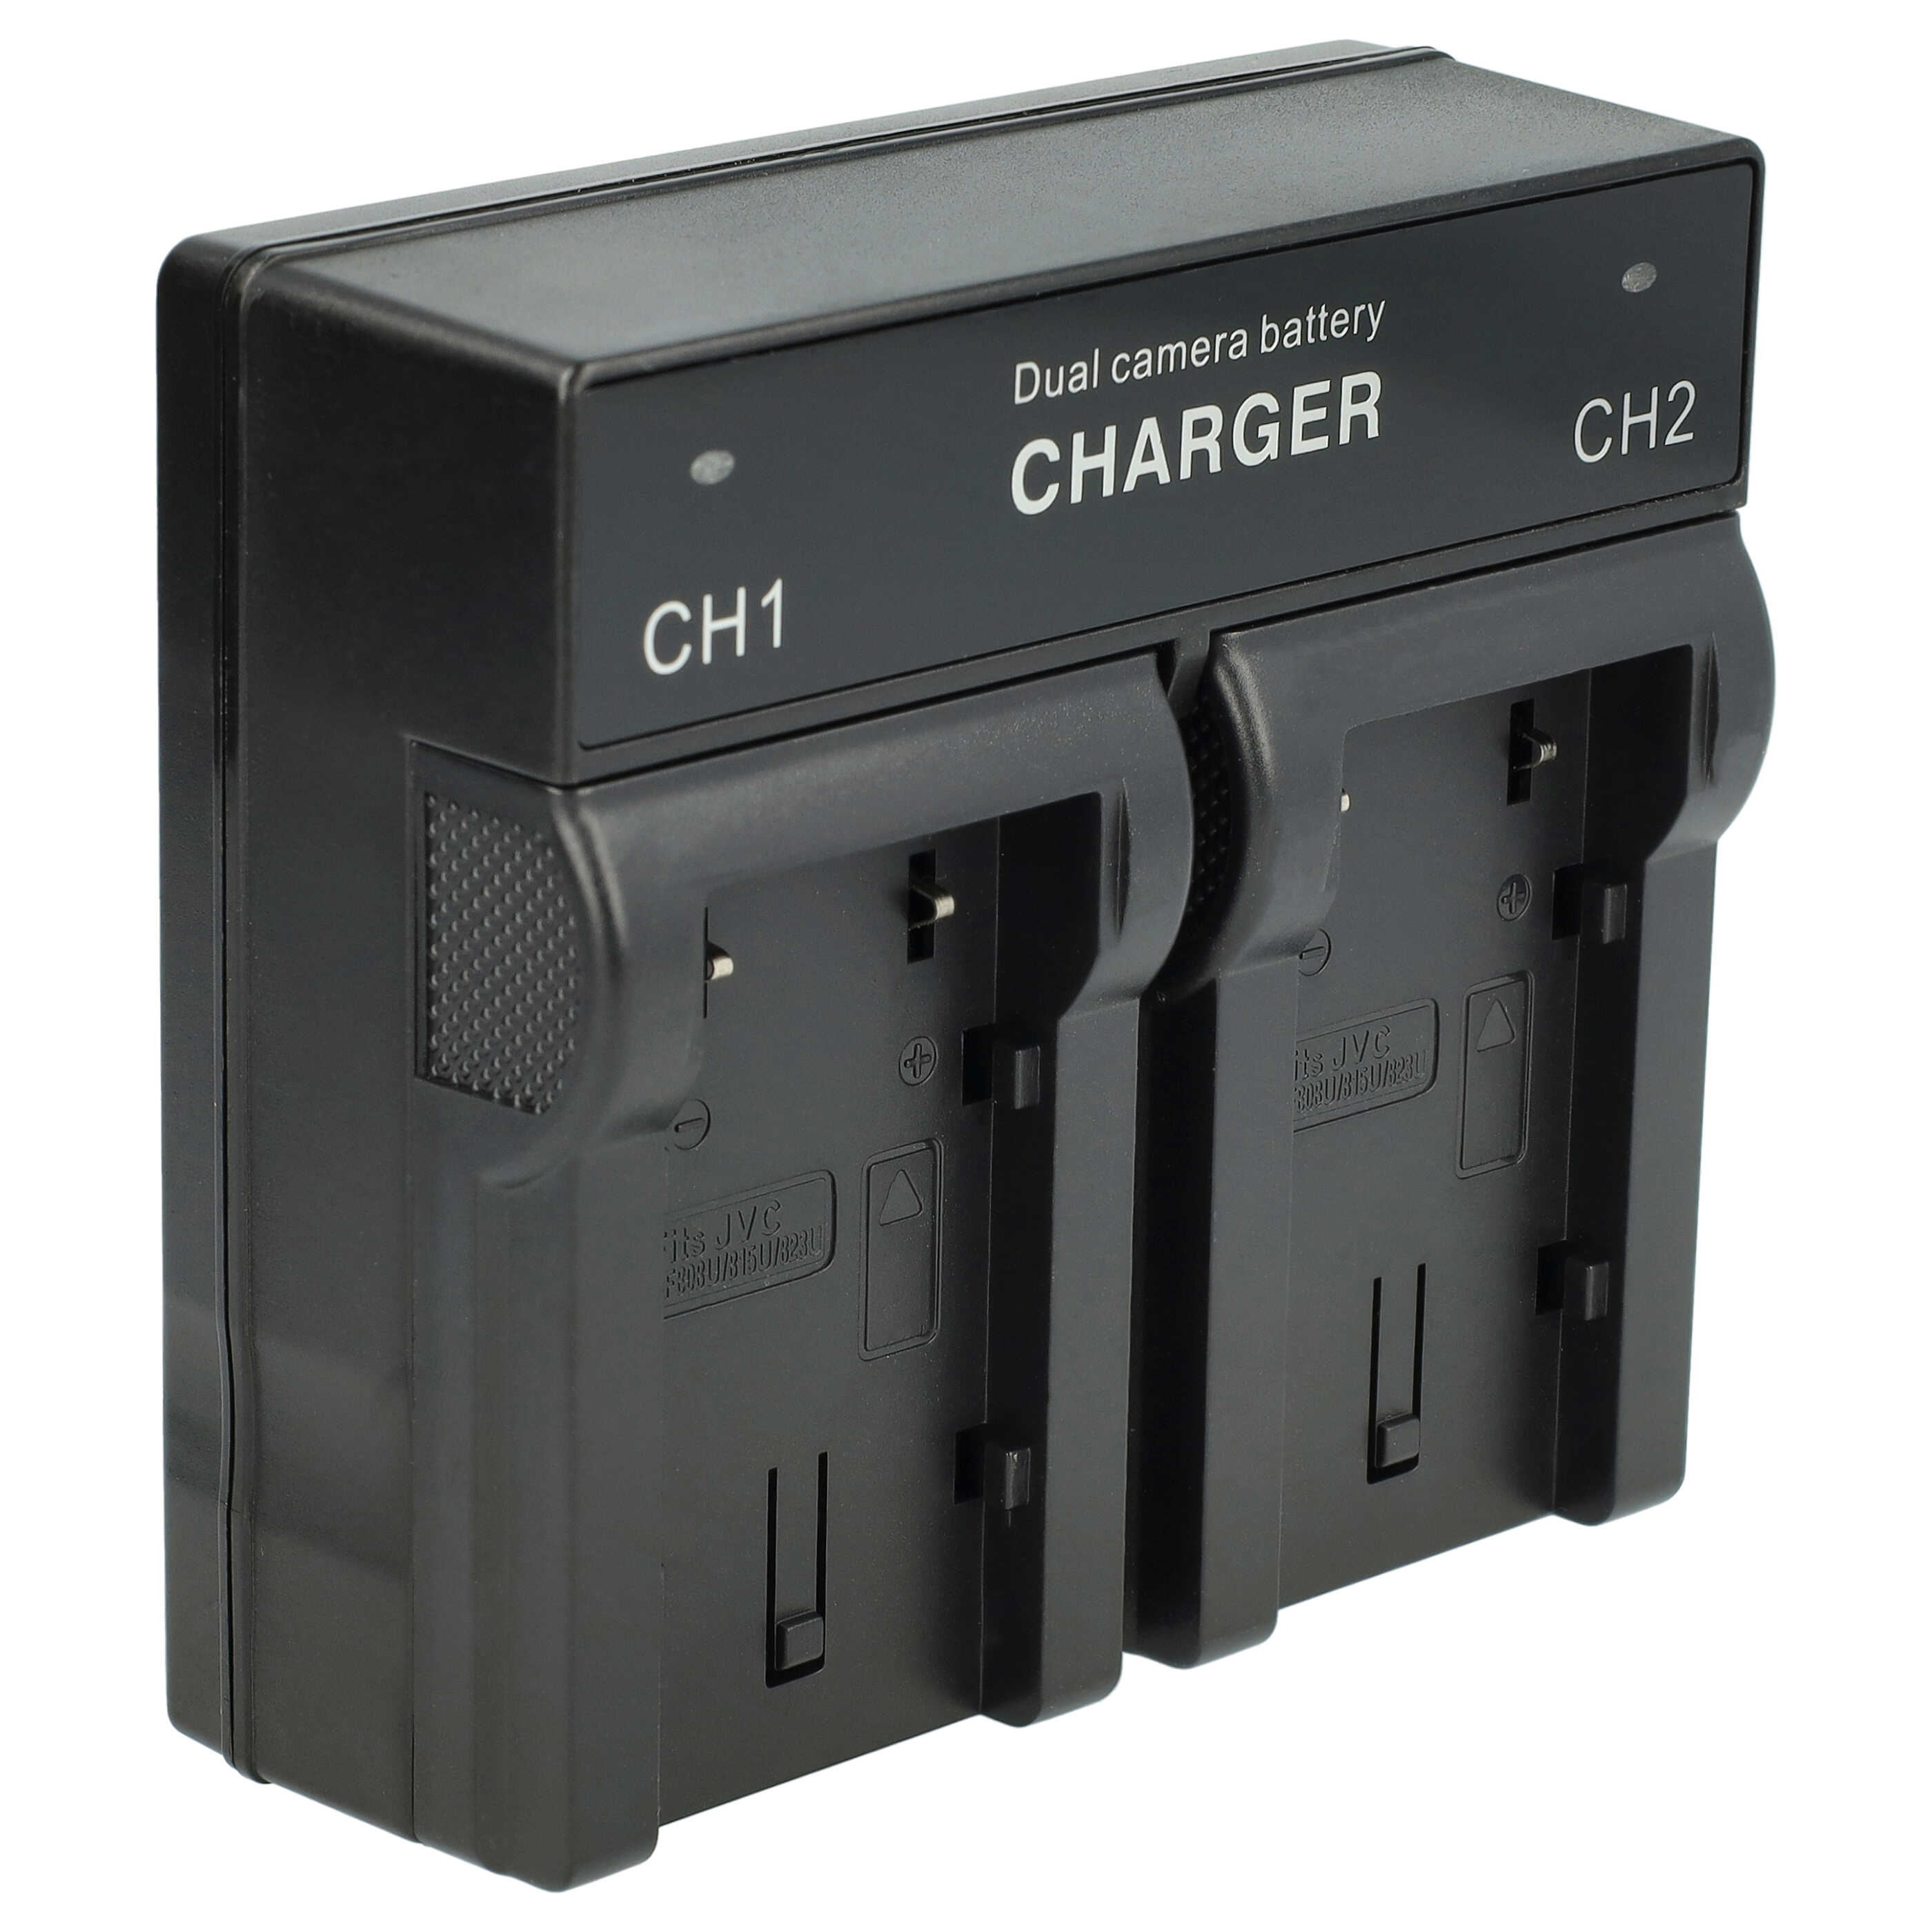 Battery Charger suitable for GR-D720 Camera etc. - 0.5 / 0.9 A, 4.2/8.4 V